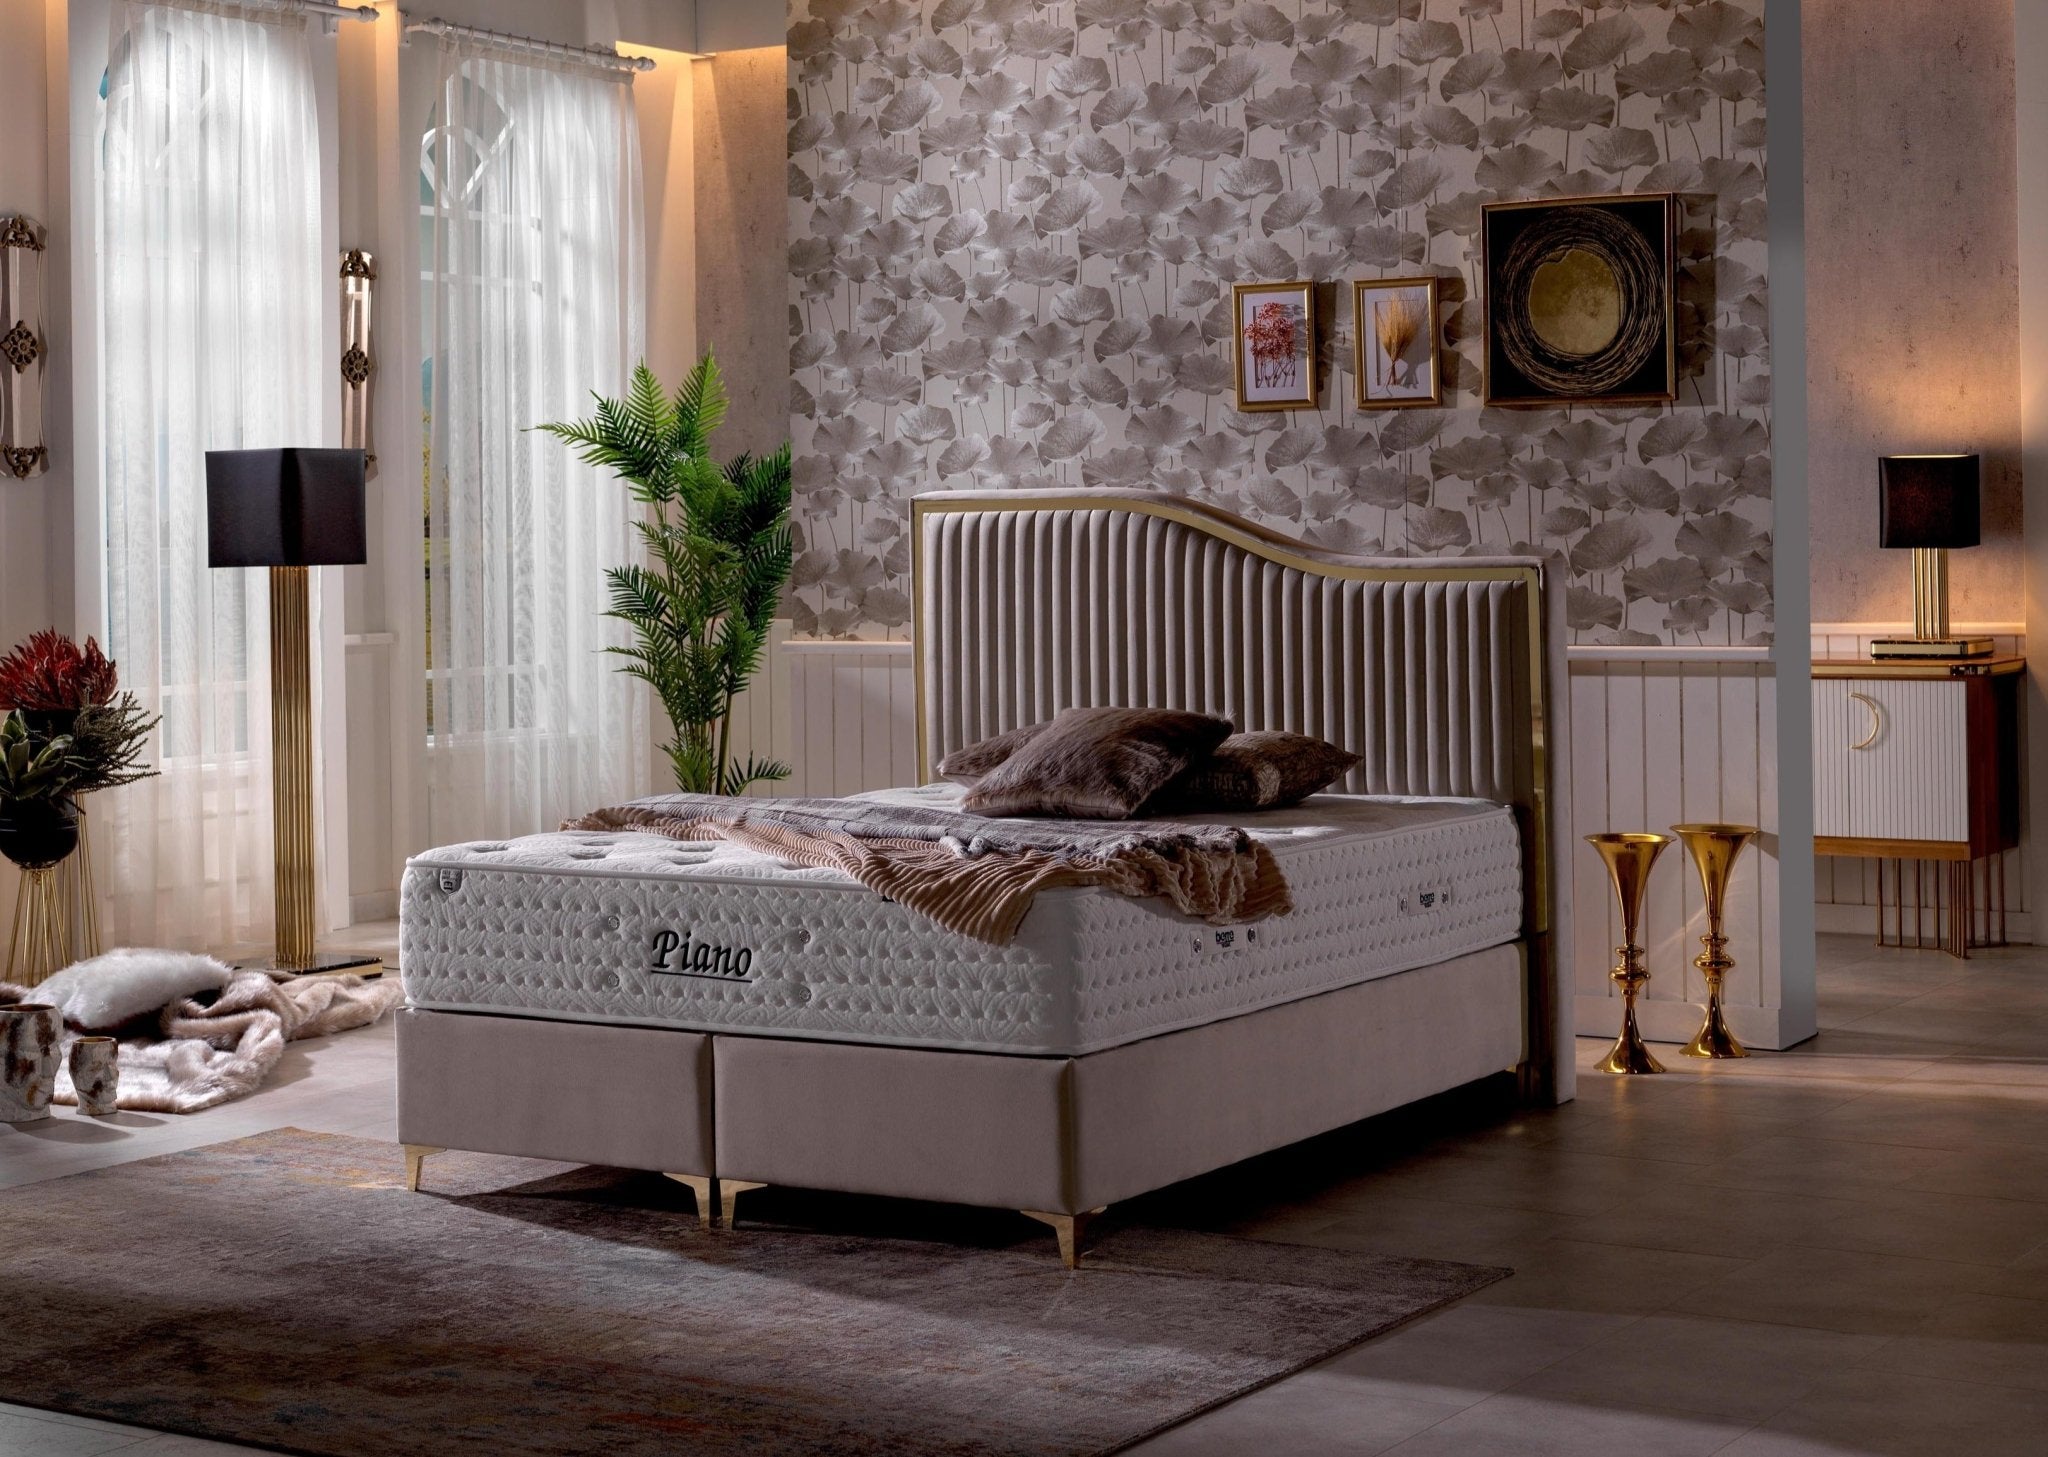 PIANO Bed - Berre Furniture